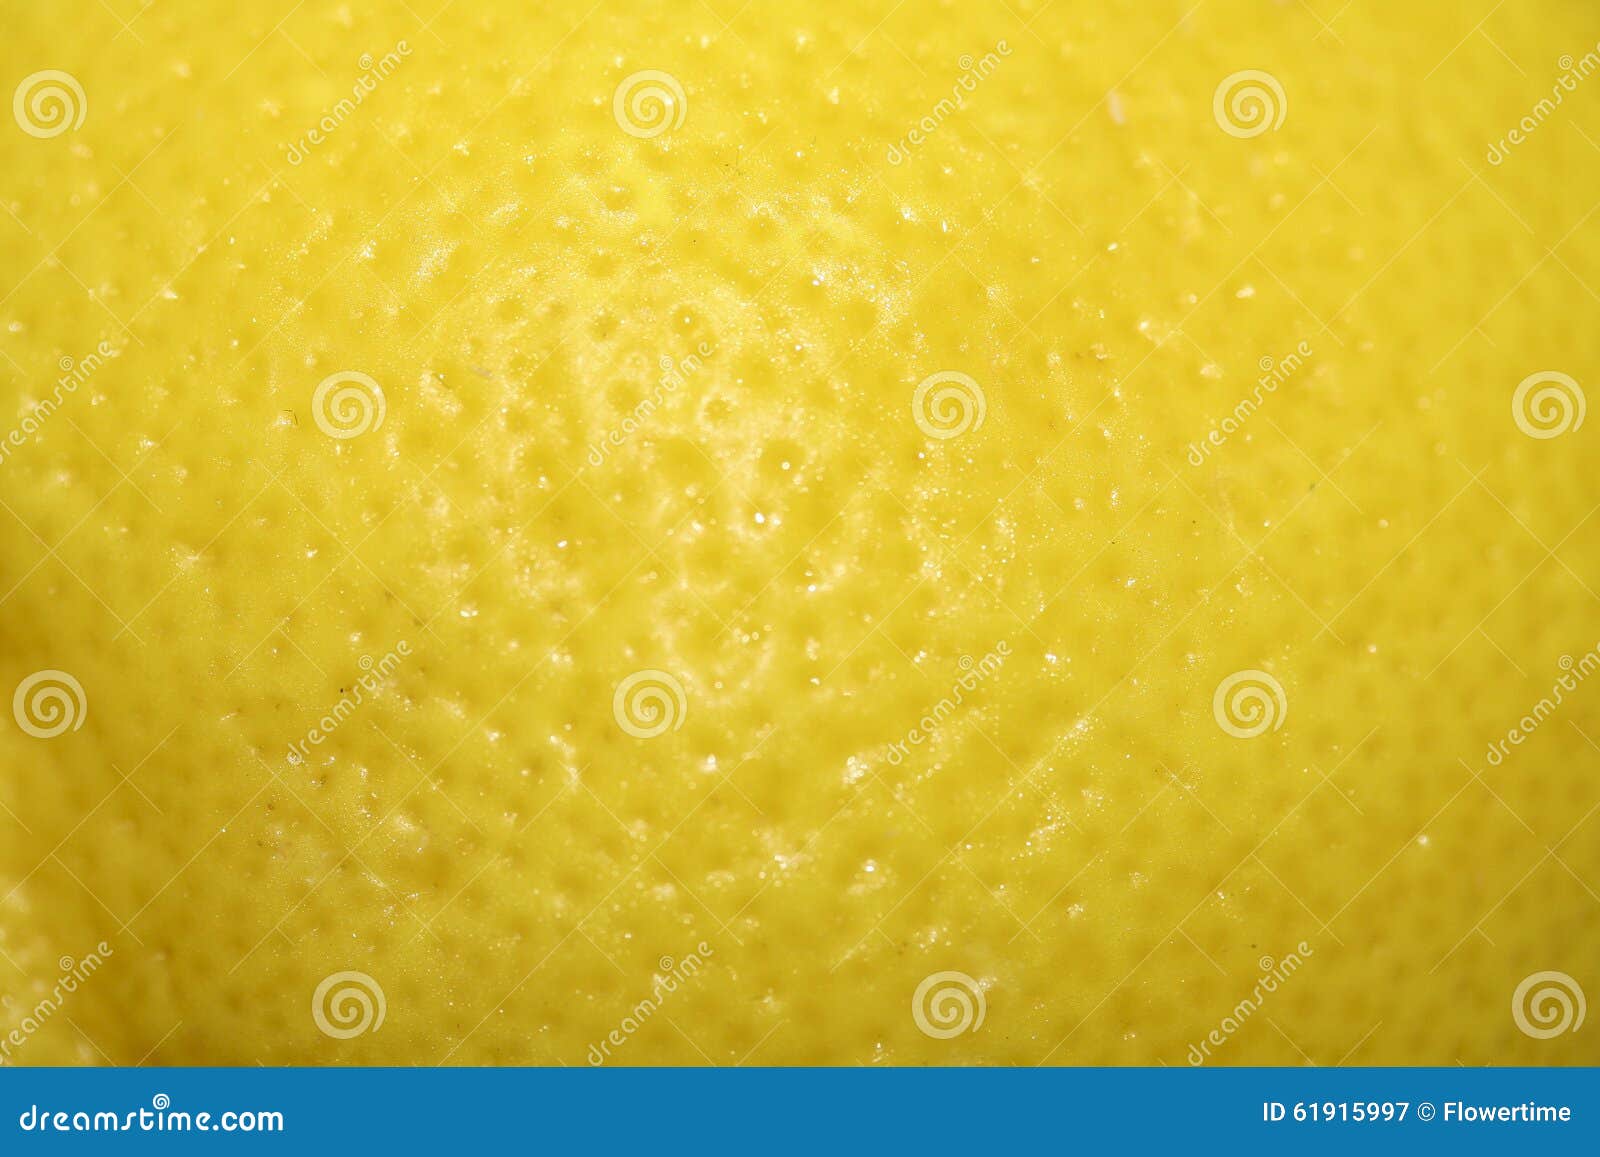 close up of lemon rind.